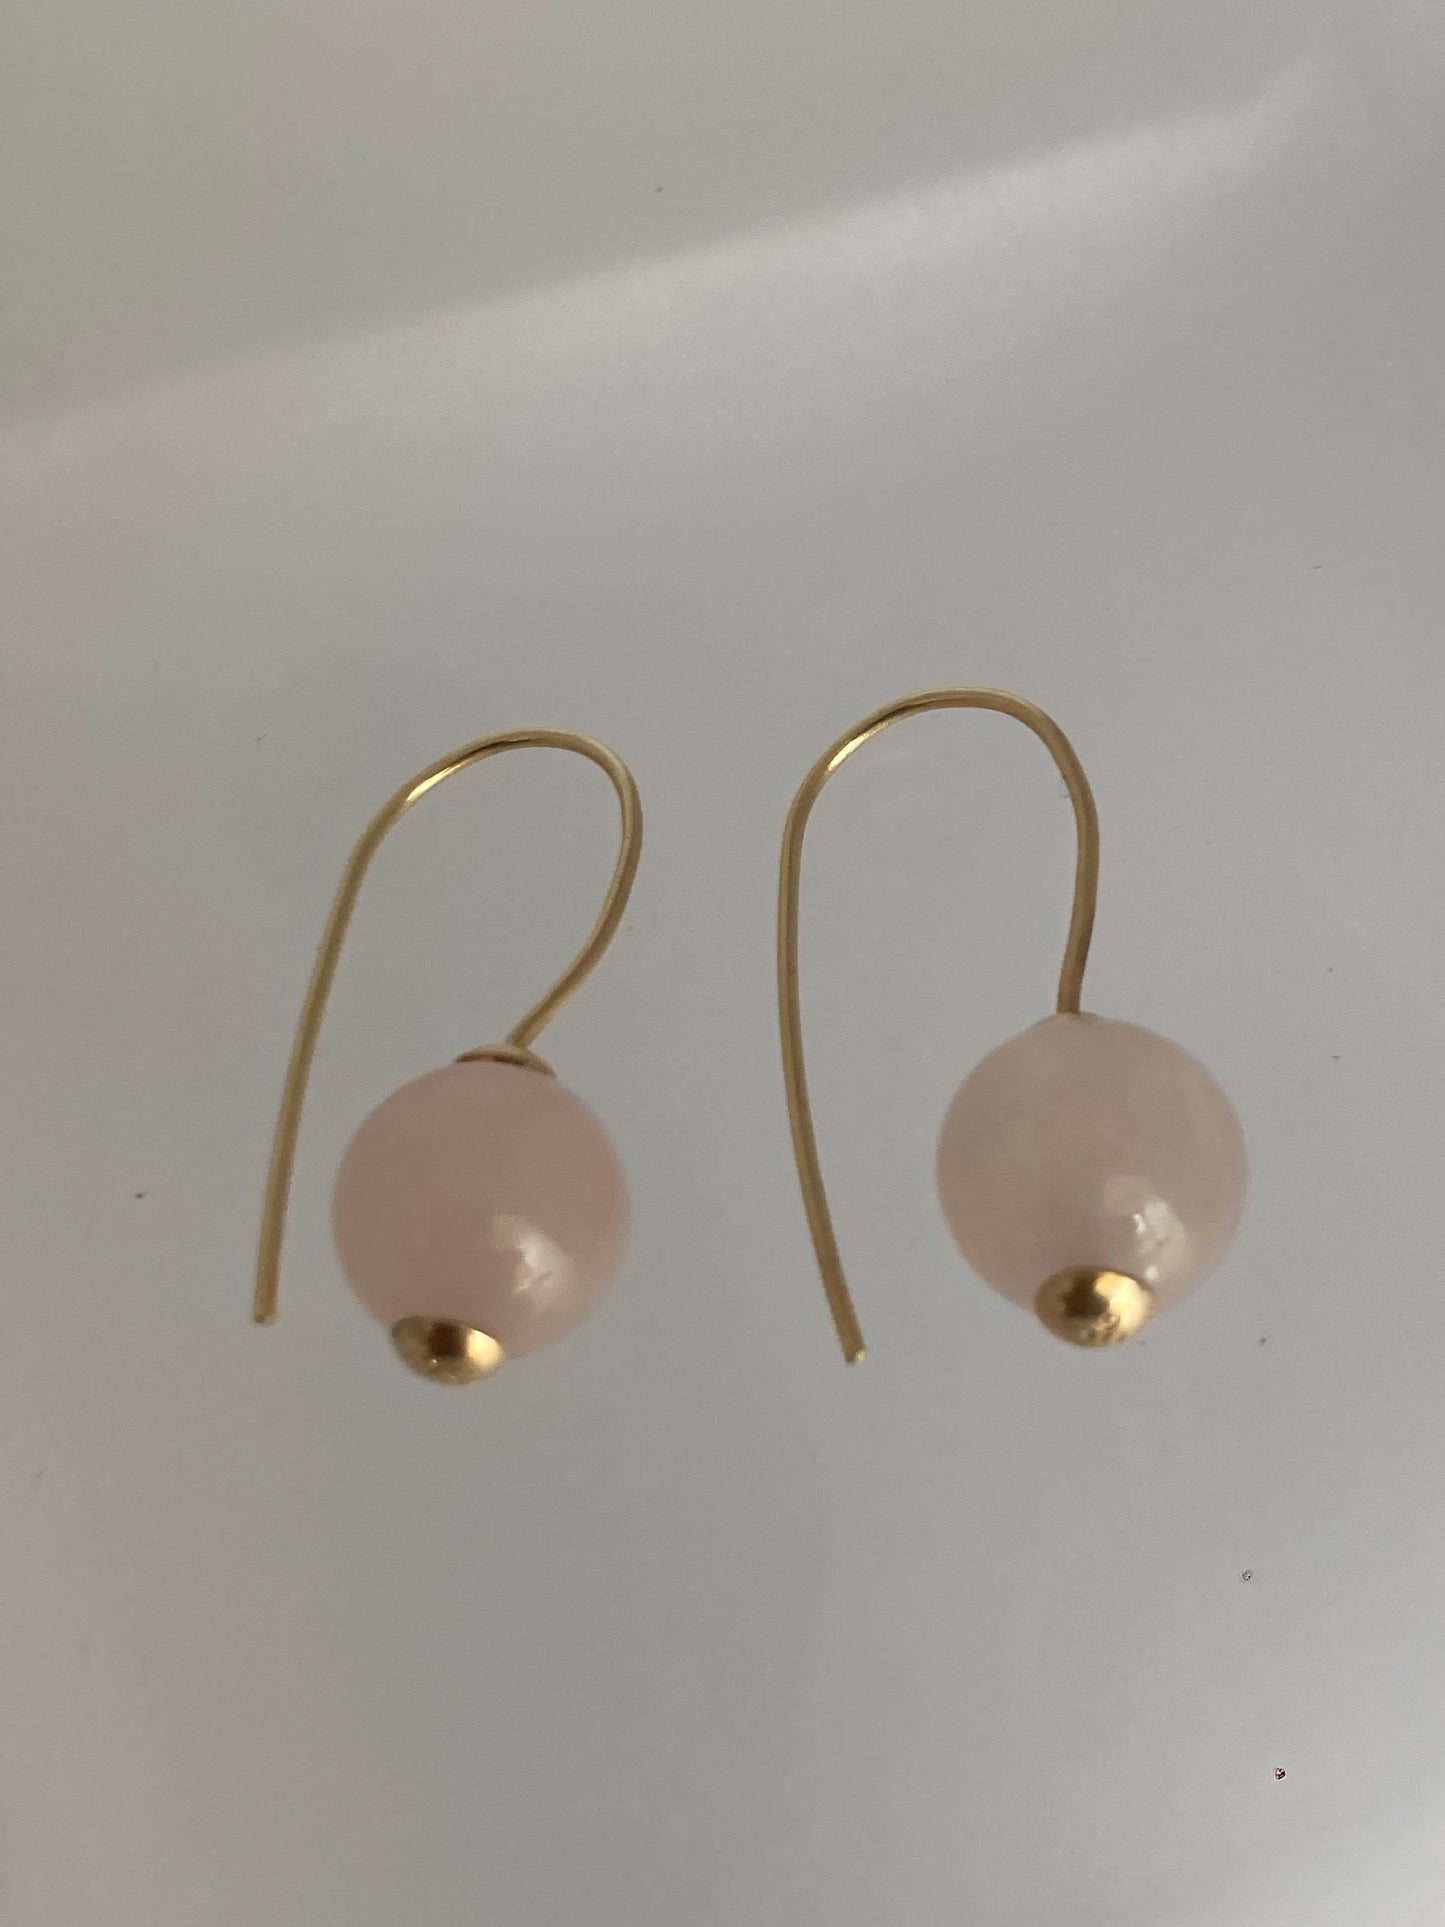 9ct gold rose quartz earrings